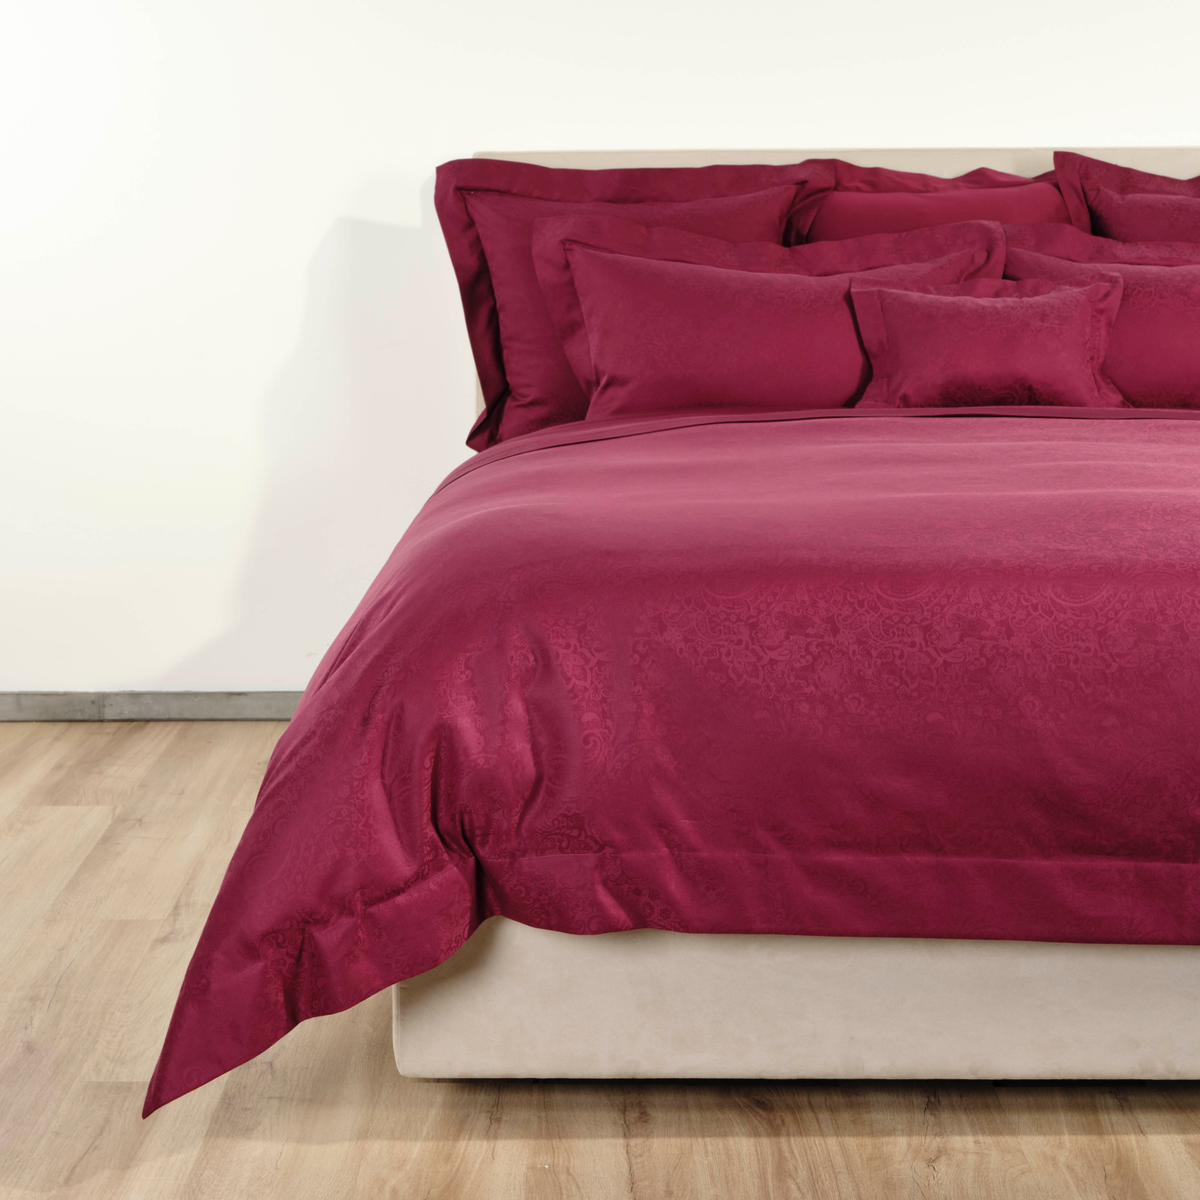 Corner Shot of Full Bed in Celso de Lemos Joanne Collection in Rubis Color